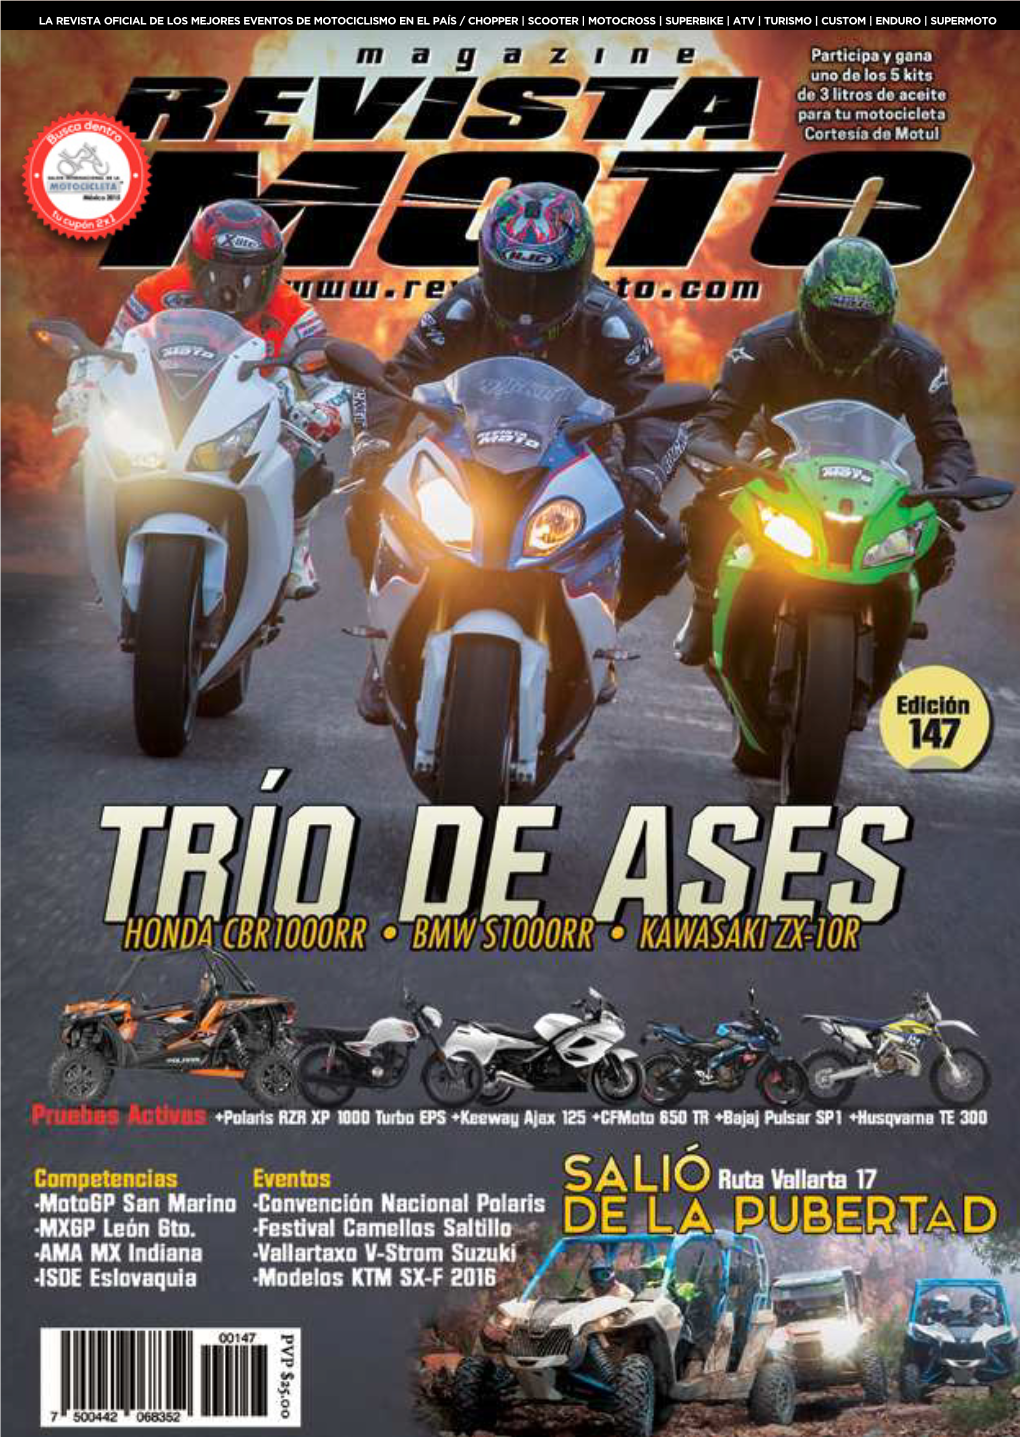 Octubredosmilquince Revista Moto | 1 Muestra Tu Espíritu Aventurero Con Can-Am